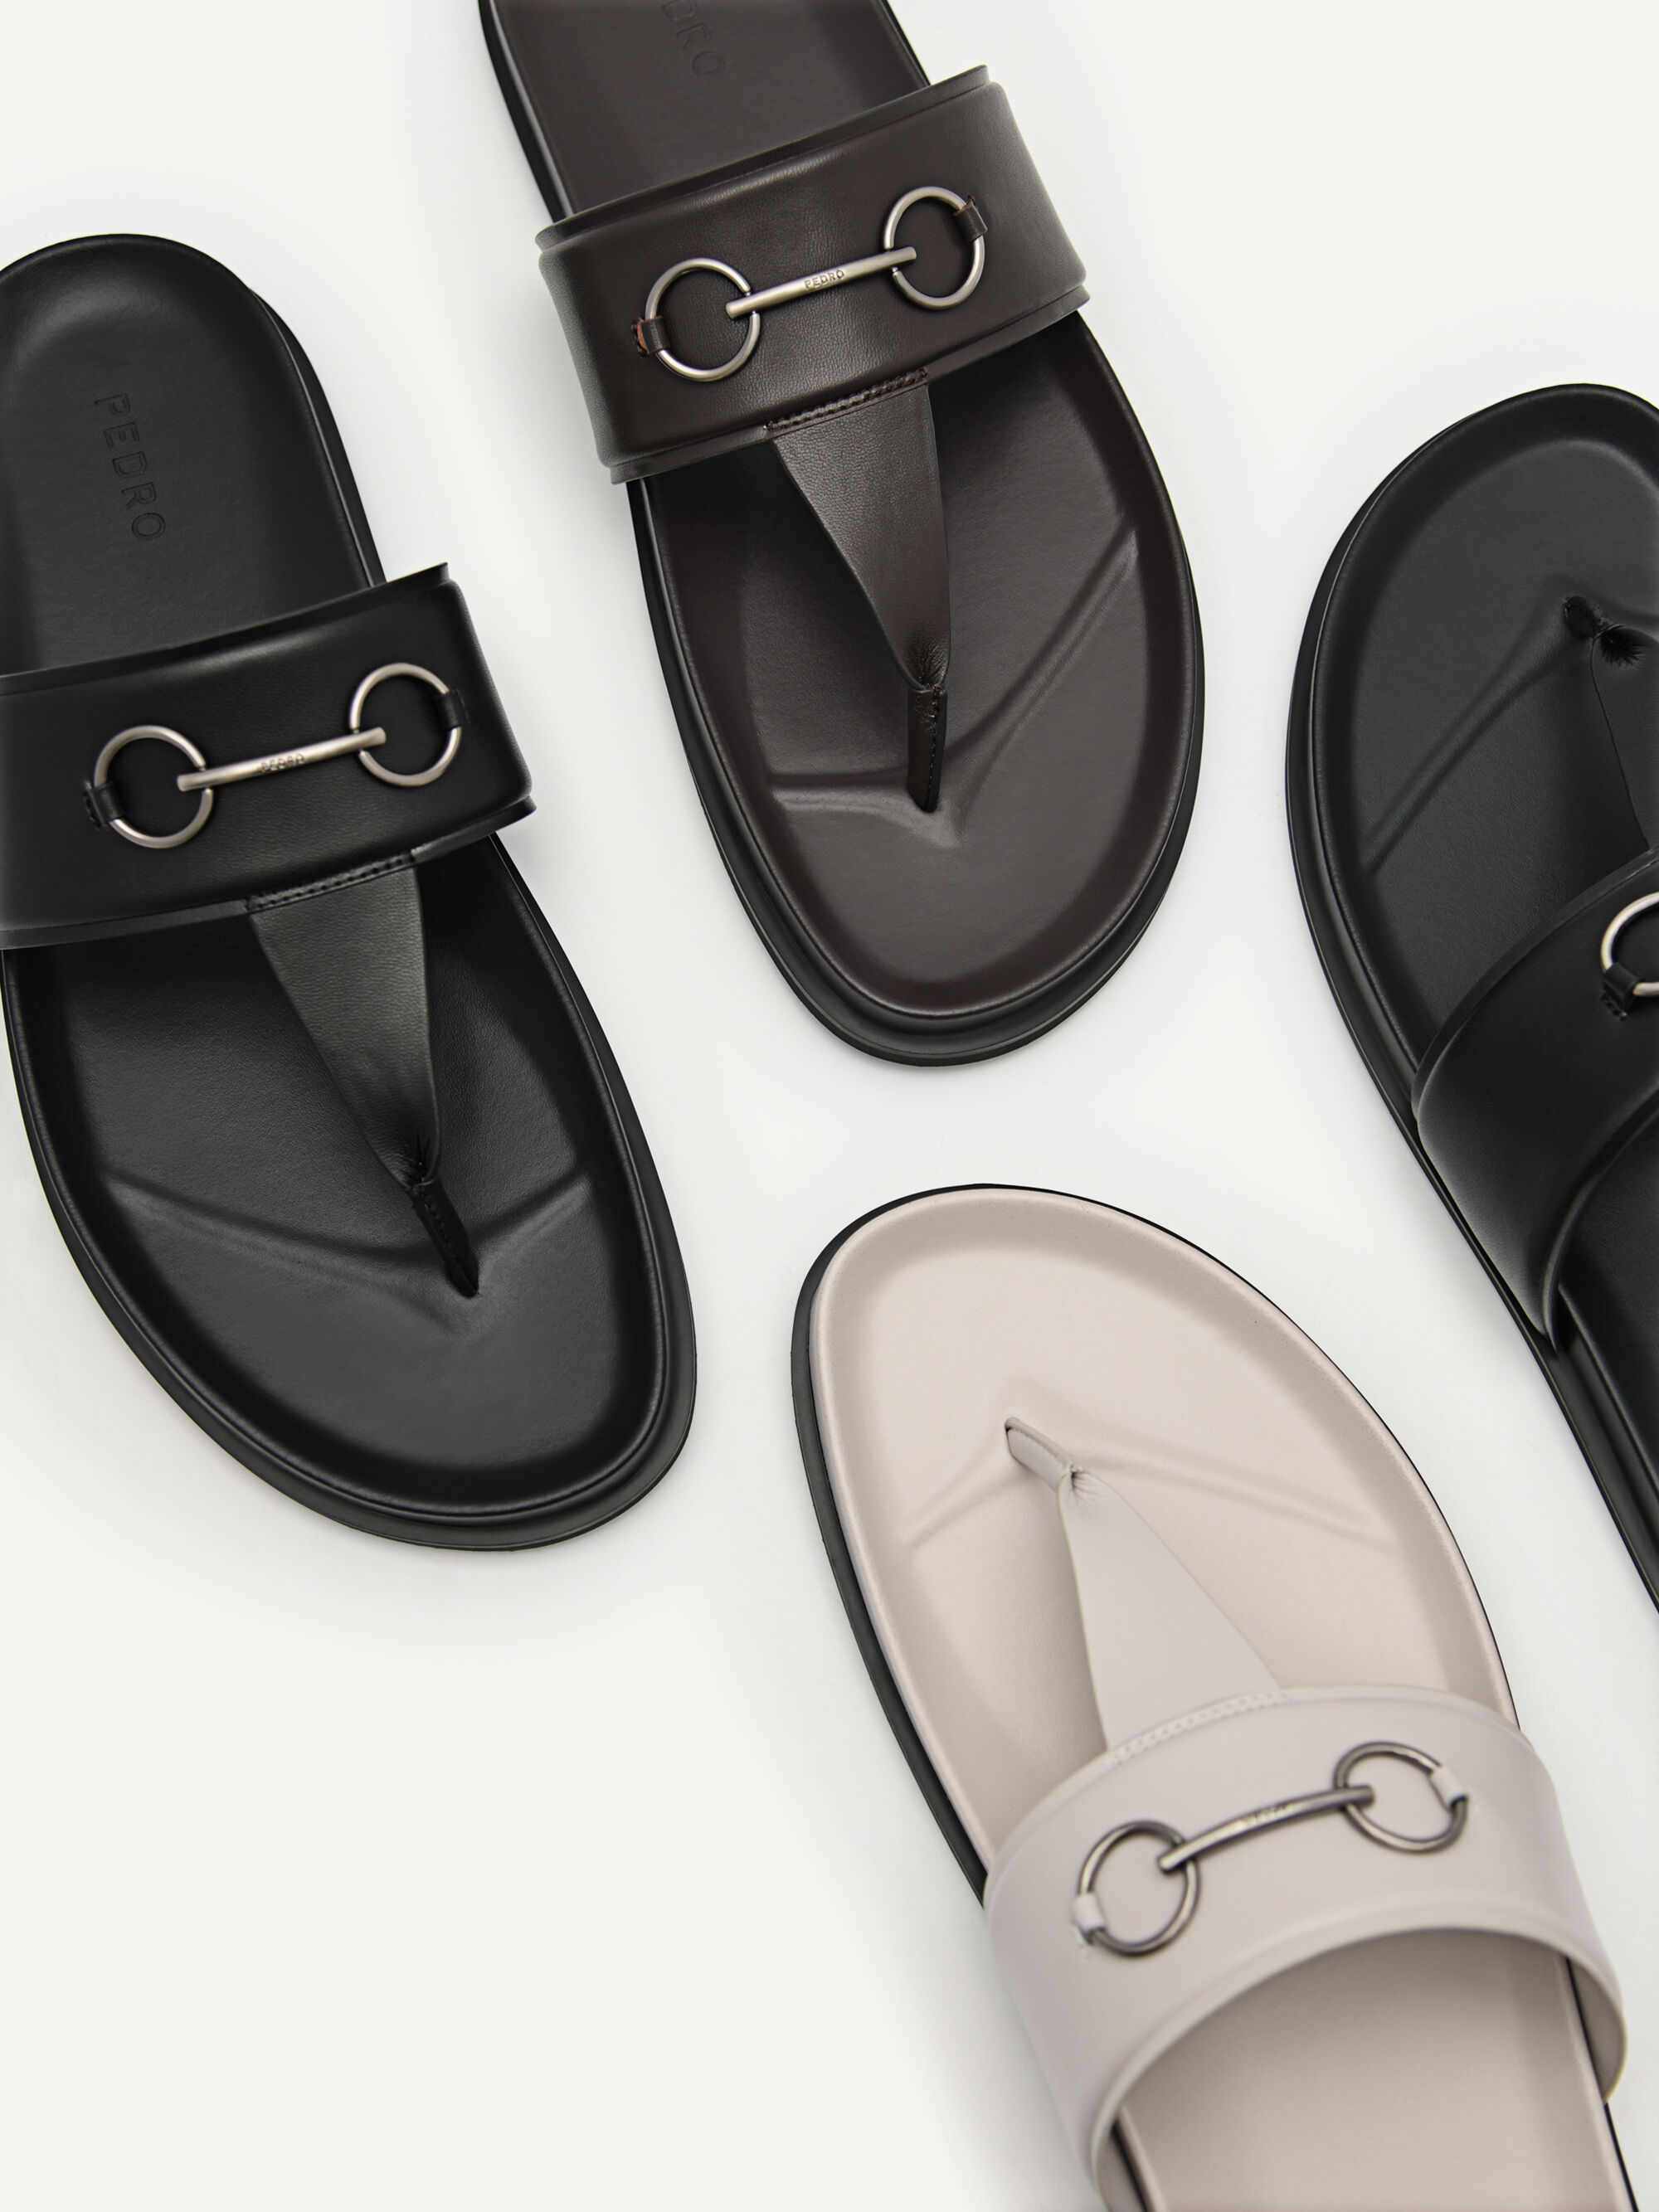 Bel-Air Sandals, Black